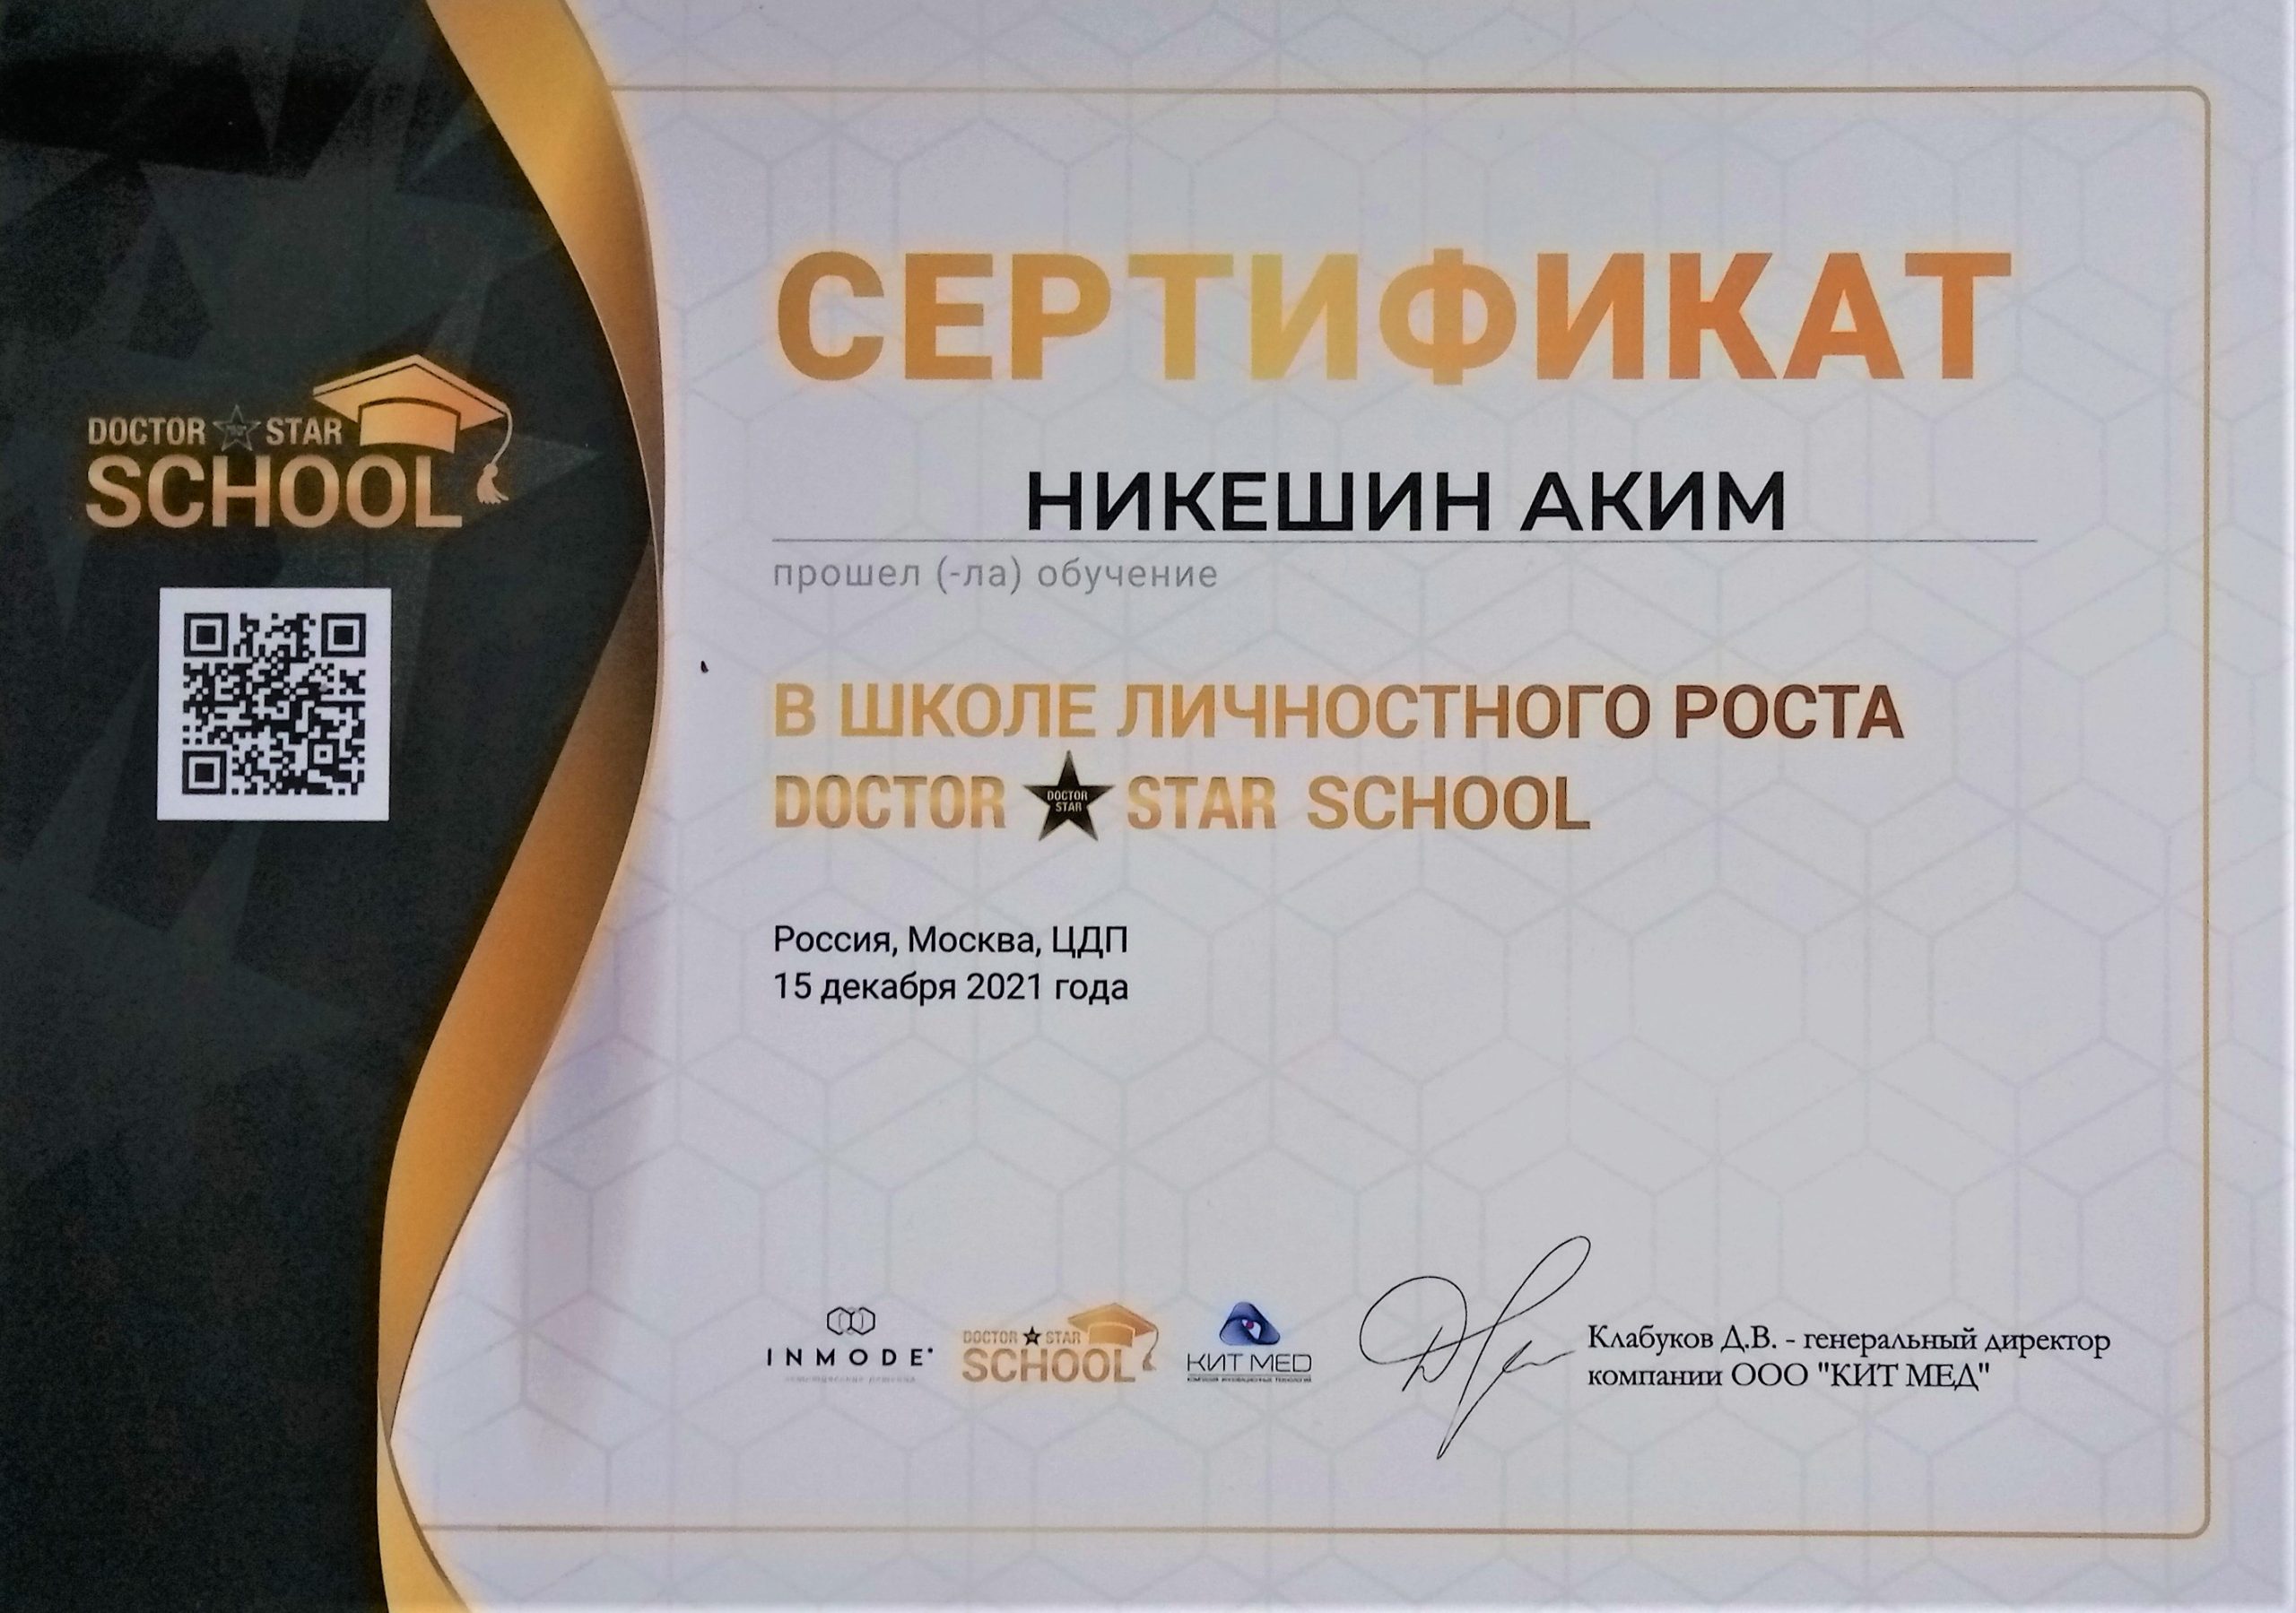 Сертификат 010